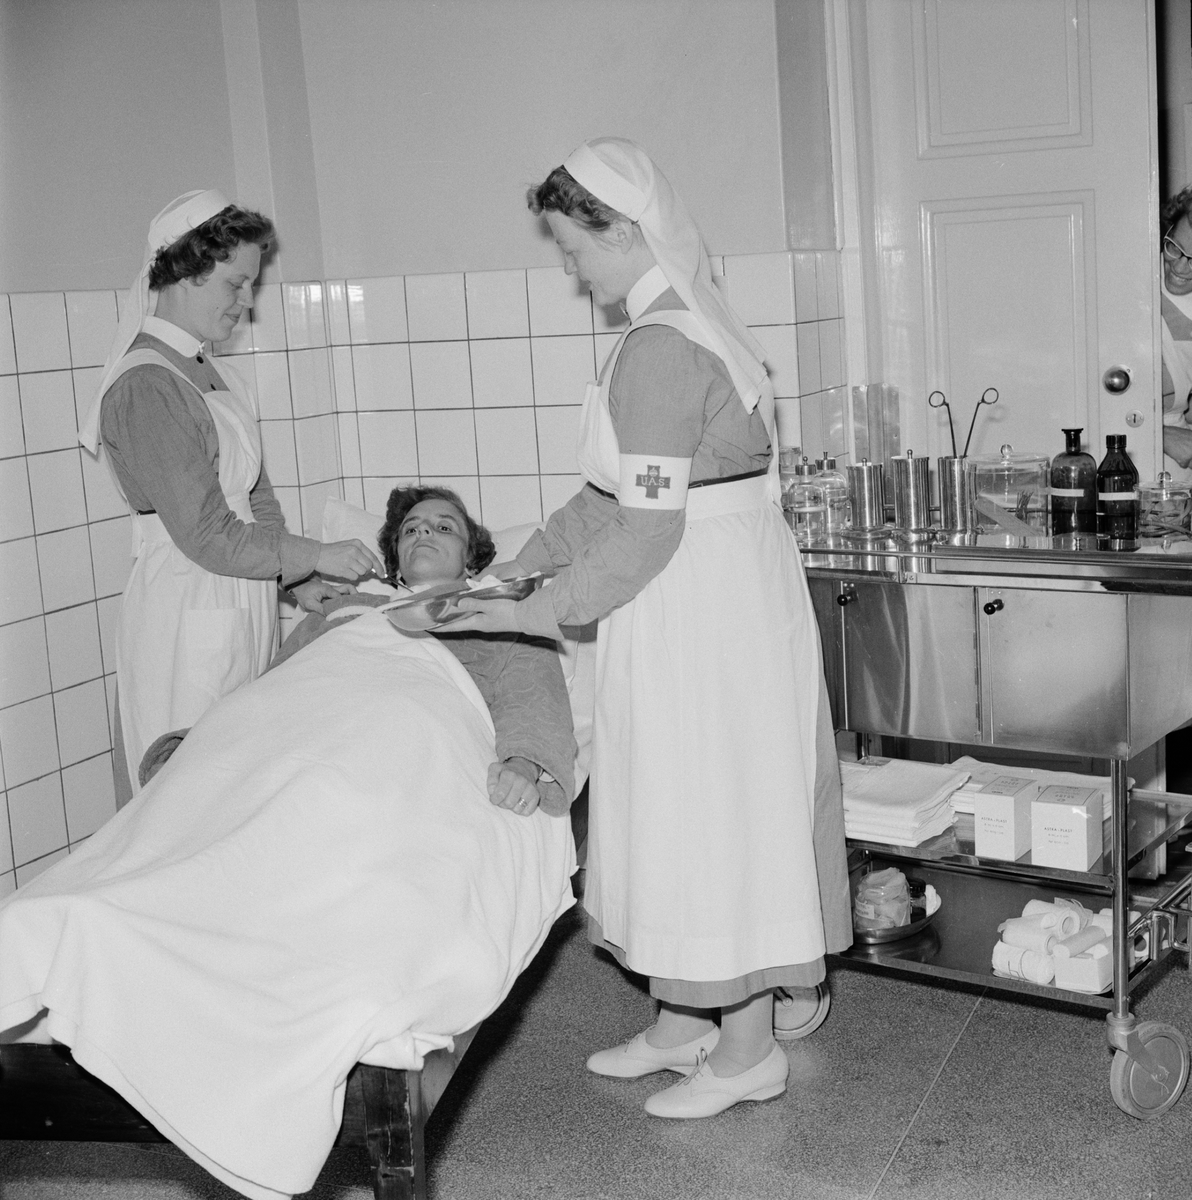 Akademiska sjukhuset, elever på sjuksköterskeskolan, Uppsala, juni 1959